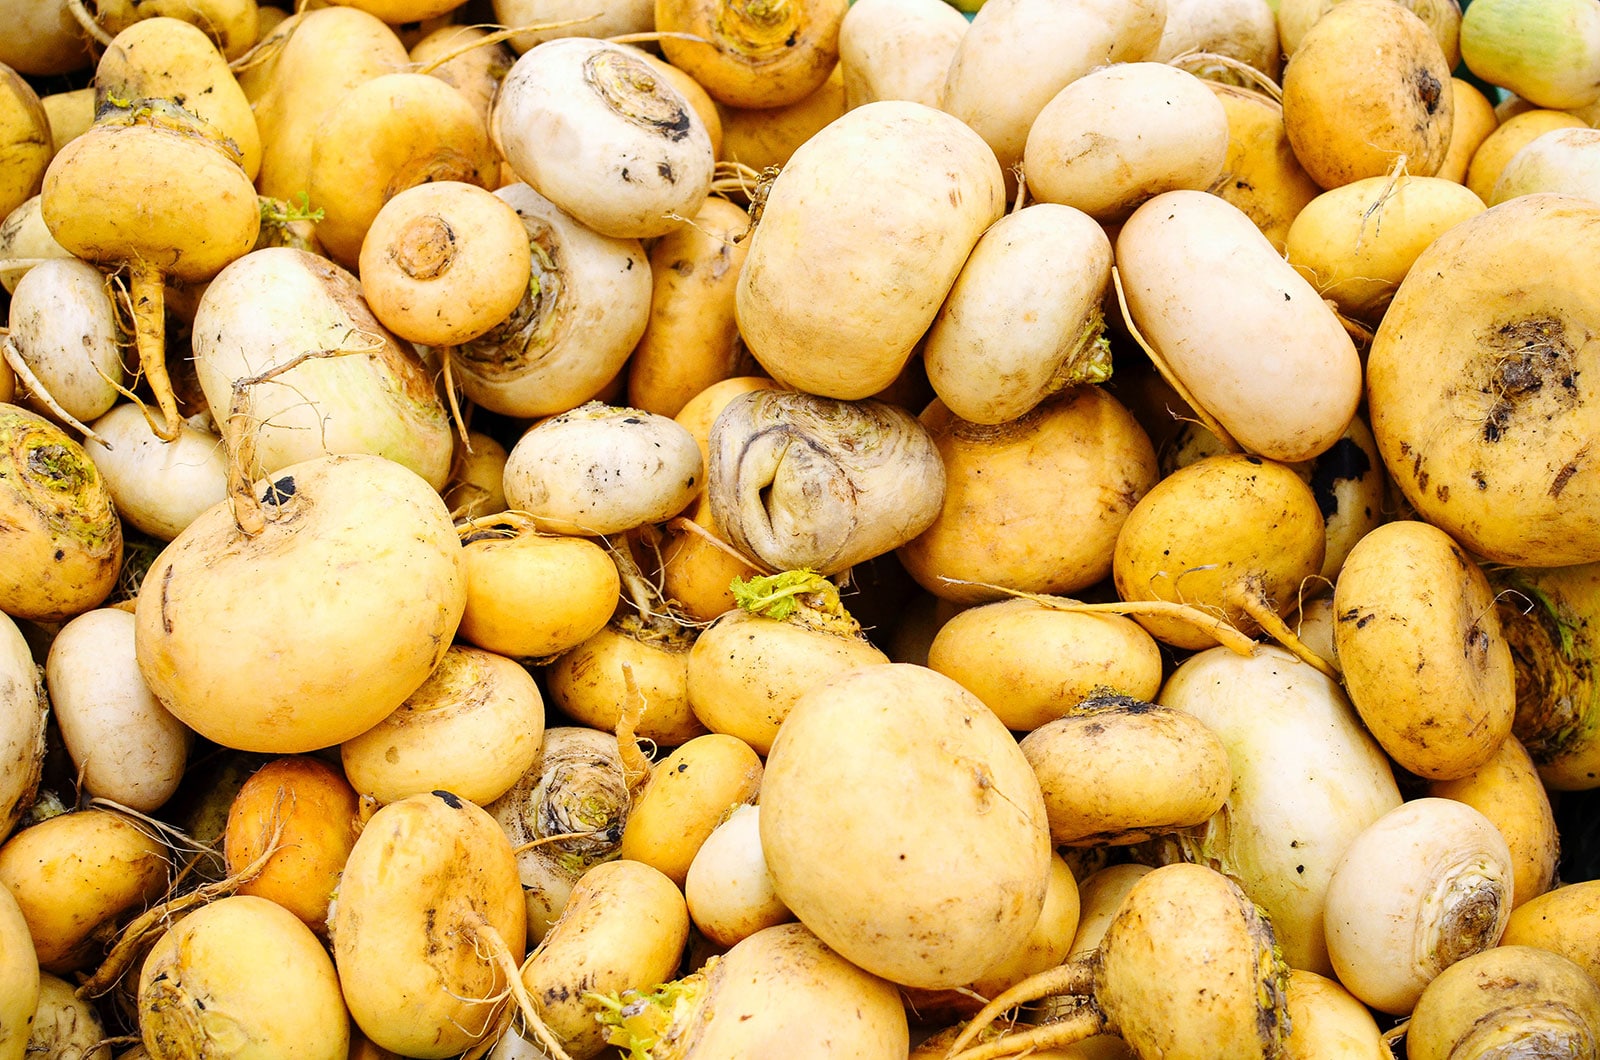 Large pile of golden turnips